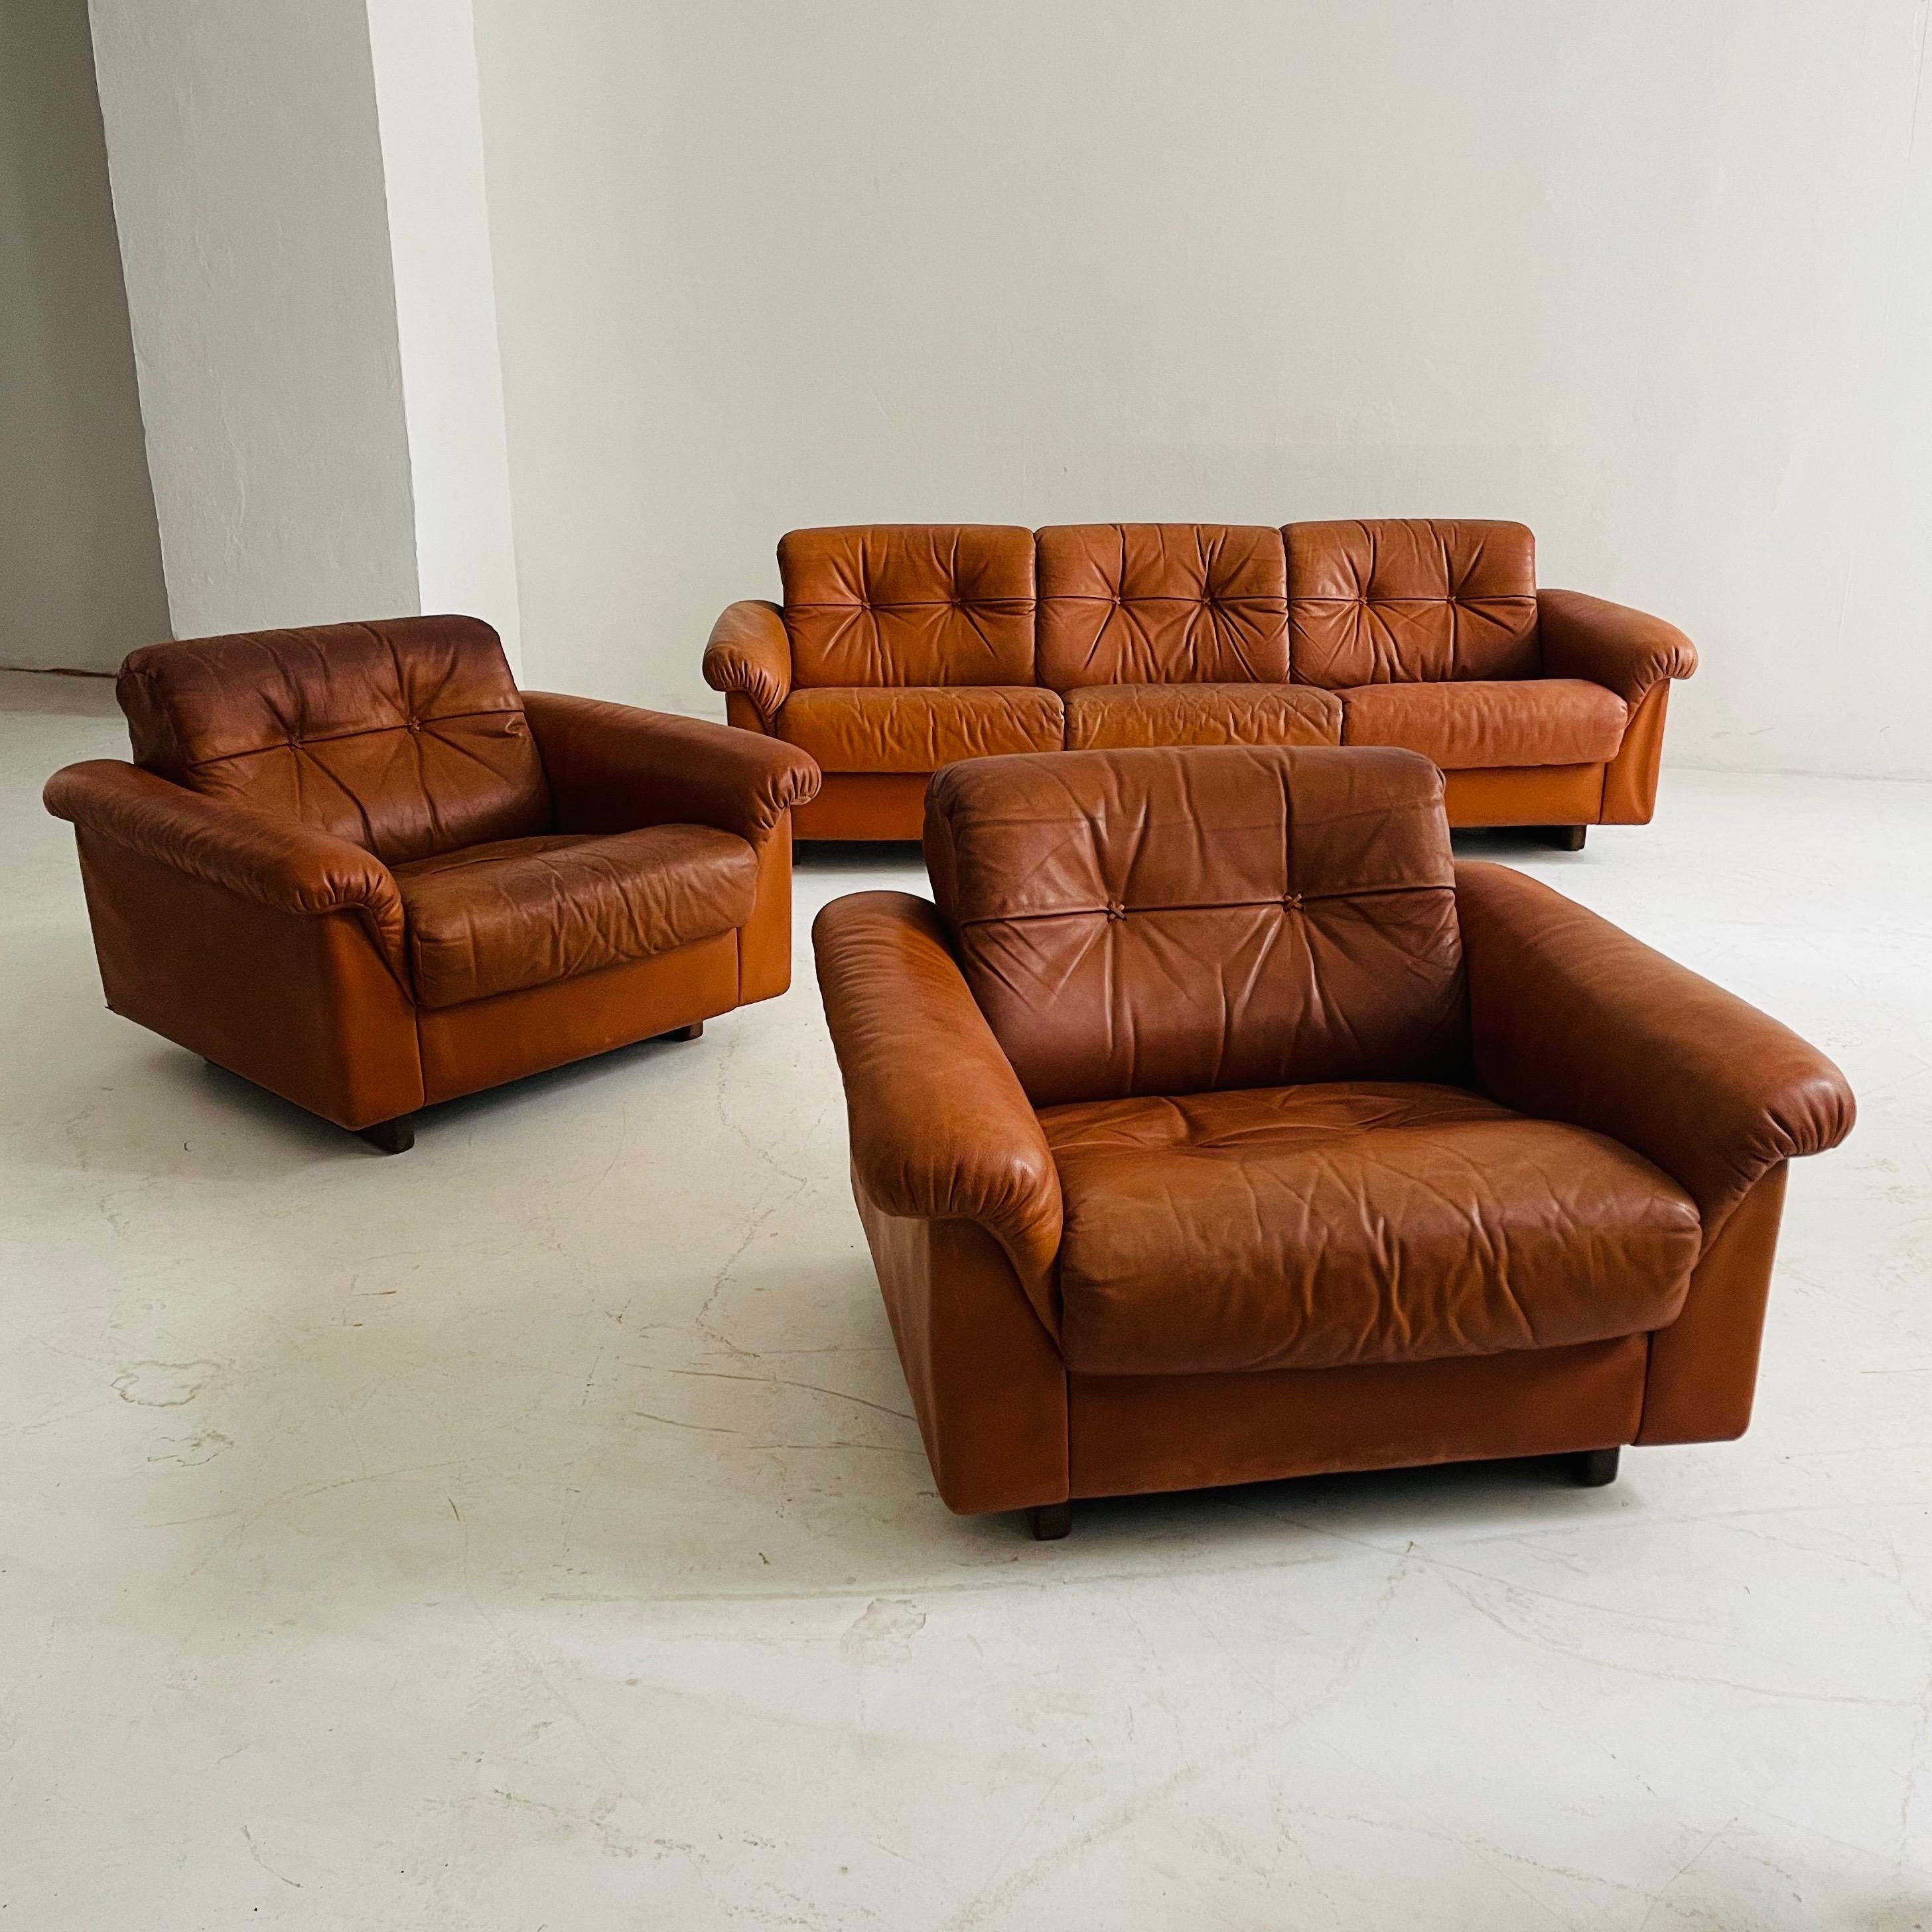 1970s living room furniture for sale